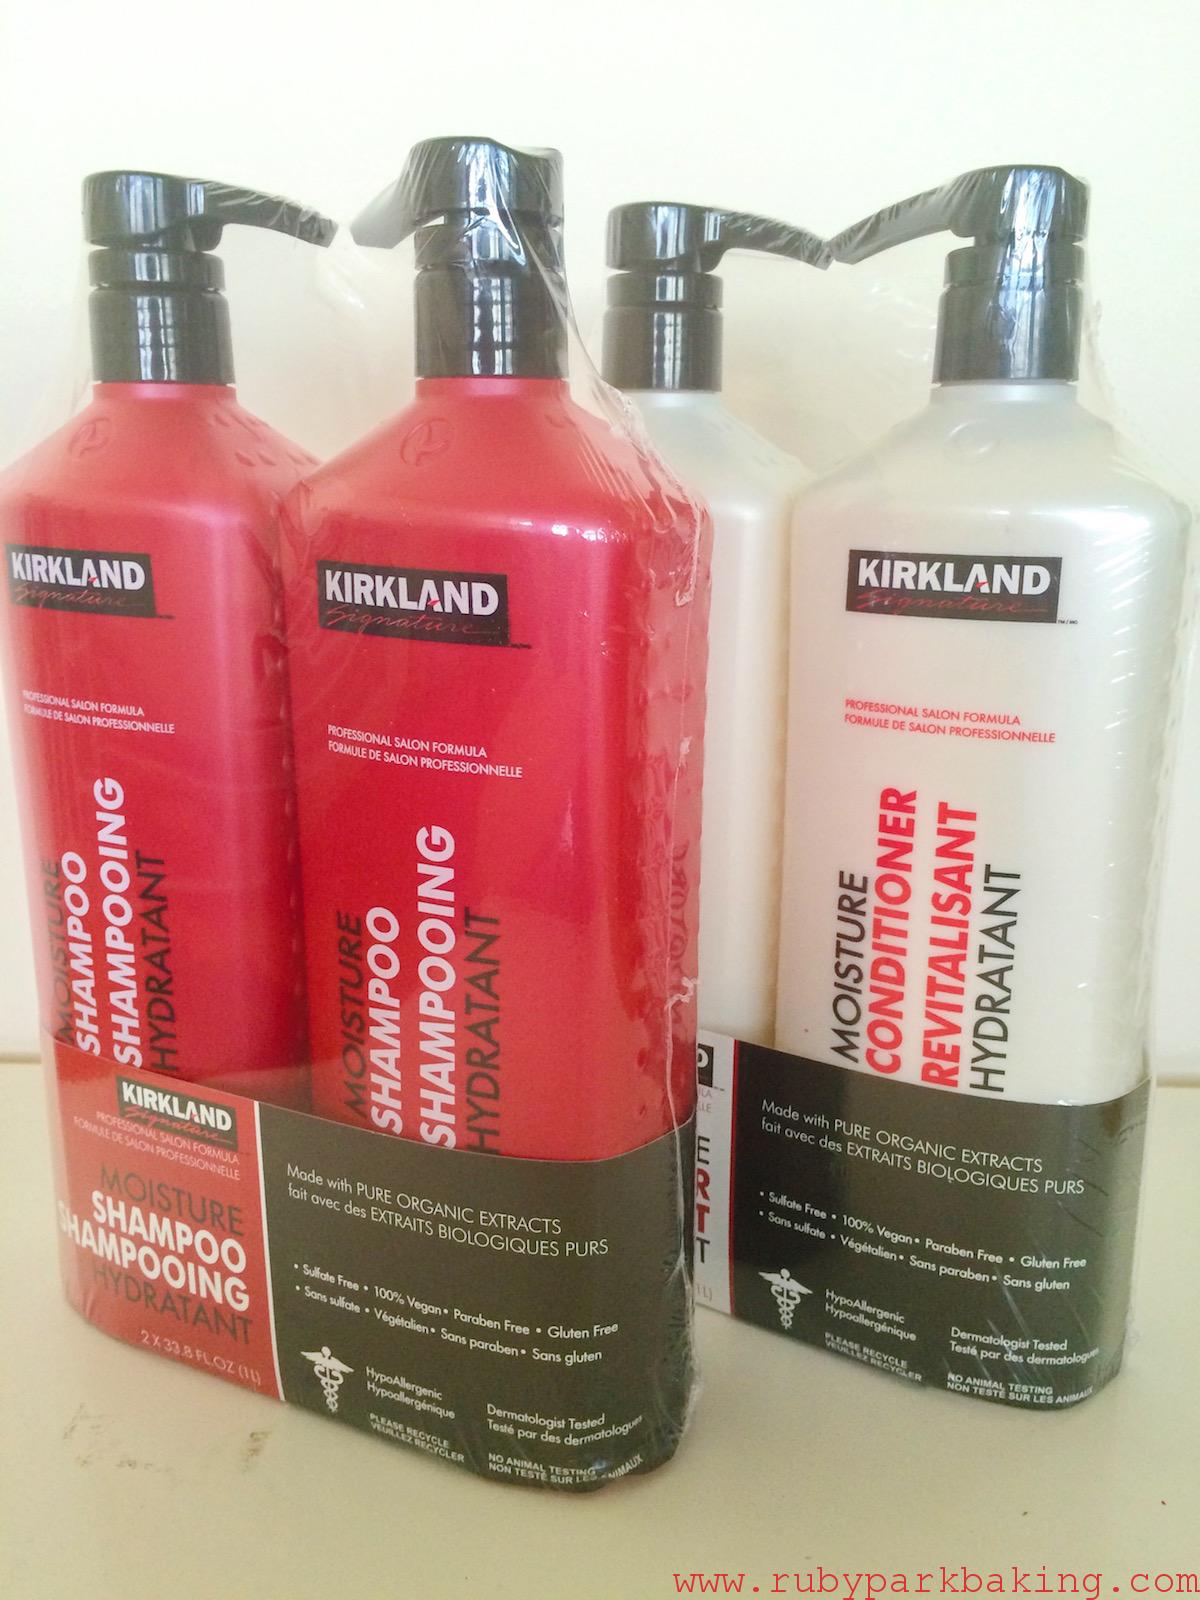 Costco, Kirkland signature shampoo and conditioner